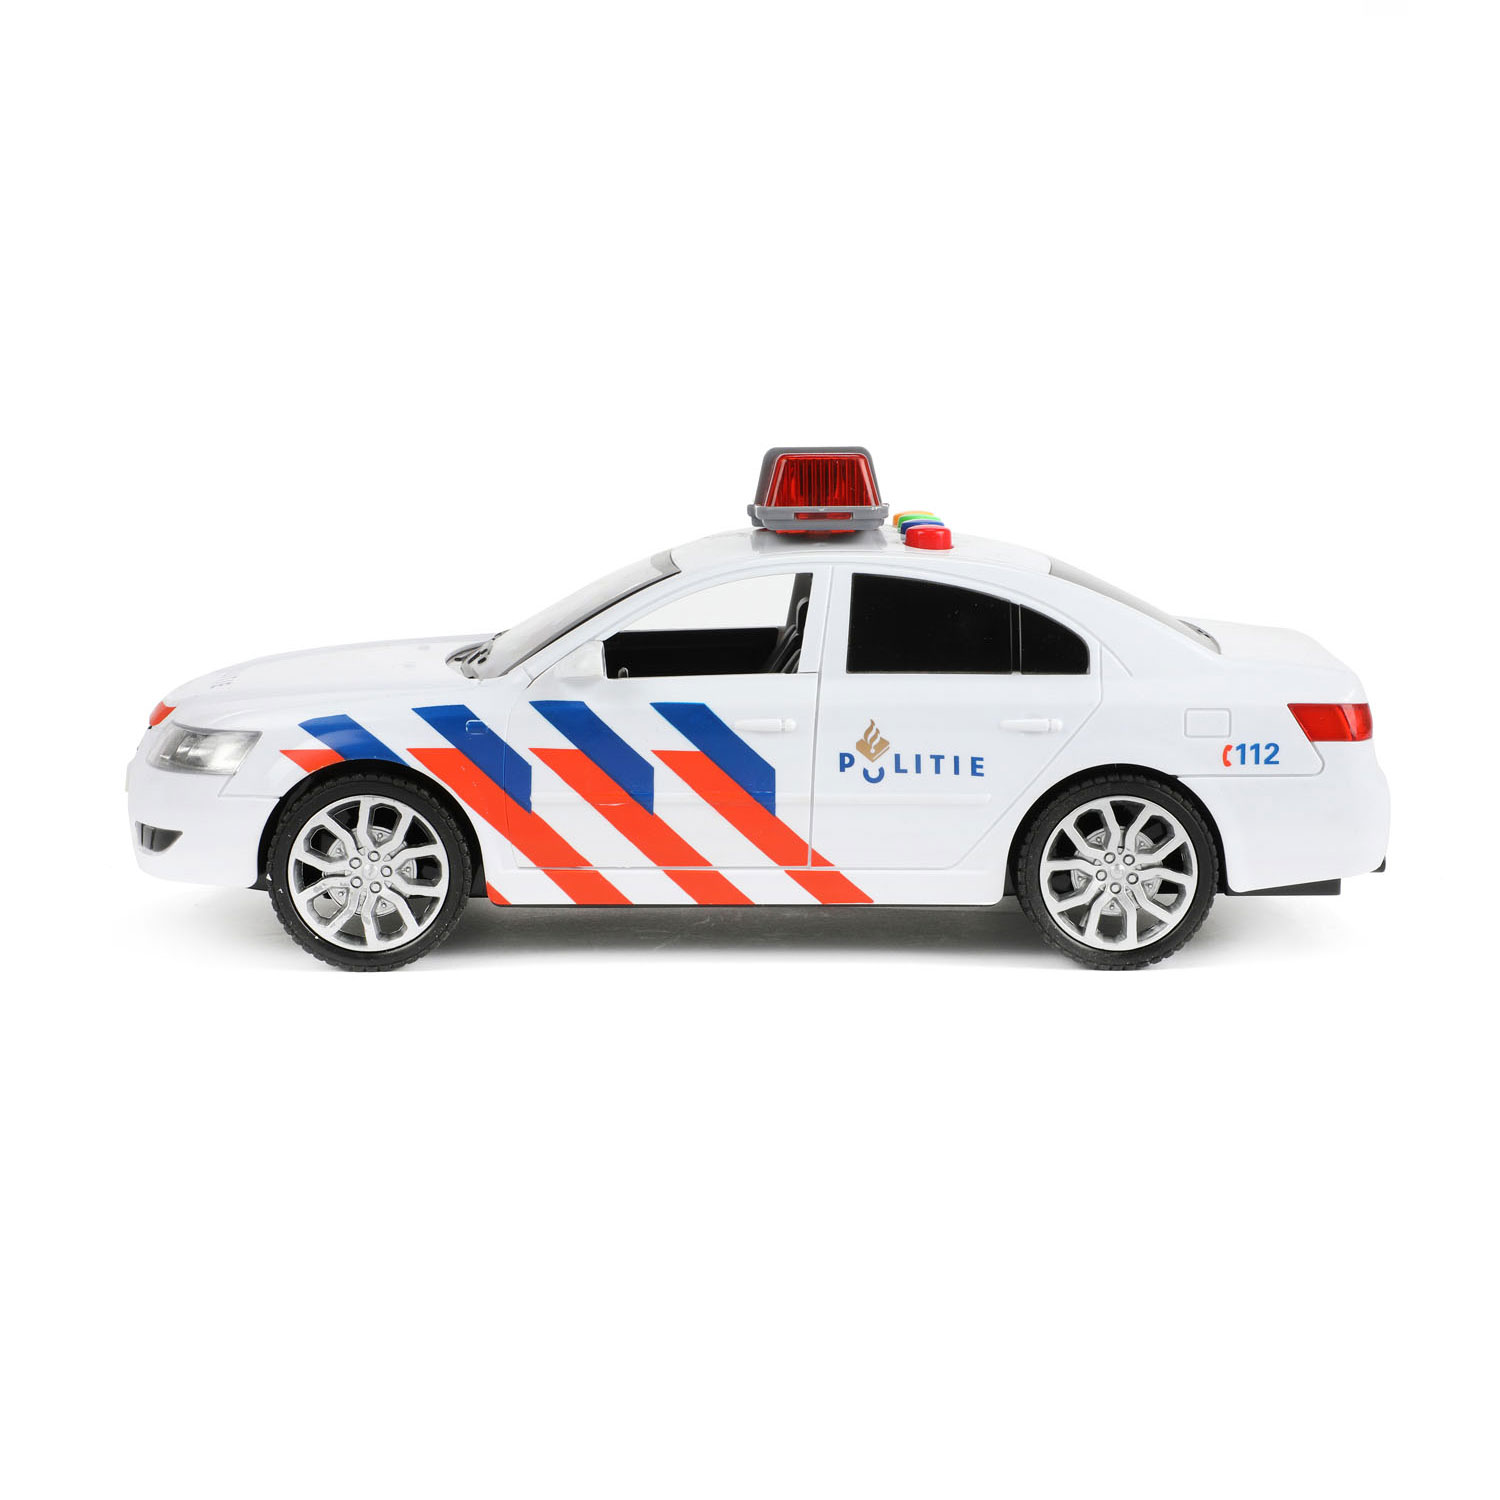 Politieauto NL Frictie, 28cm